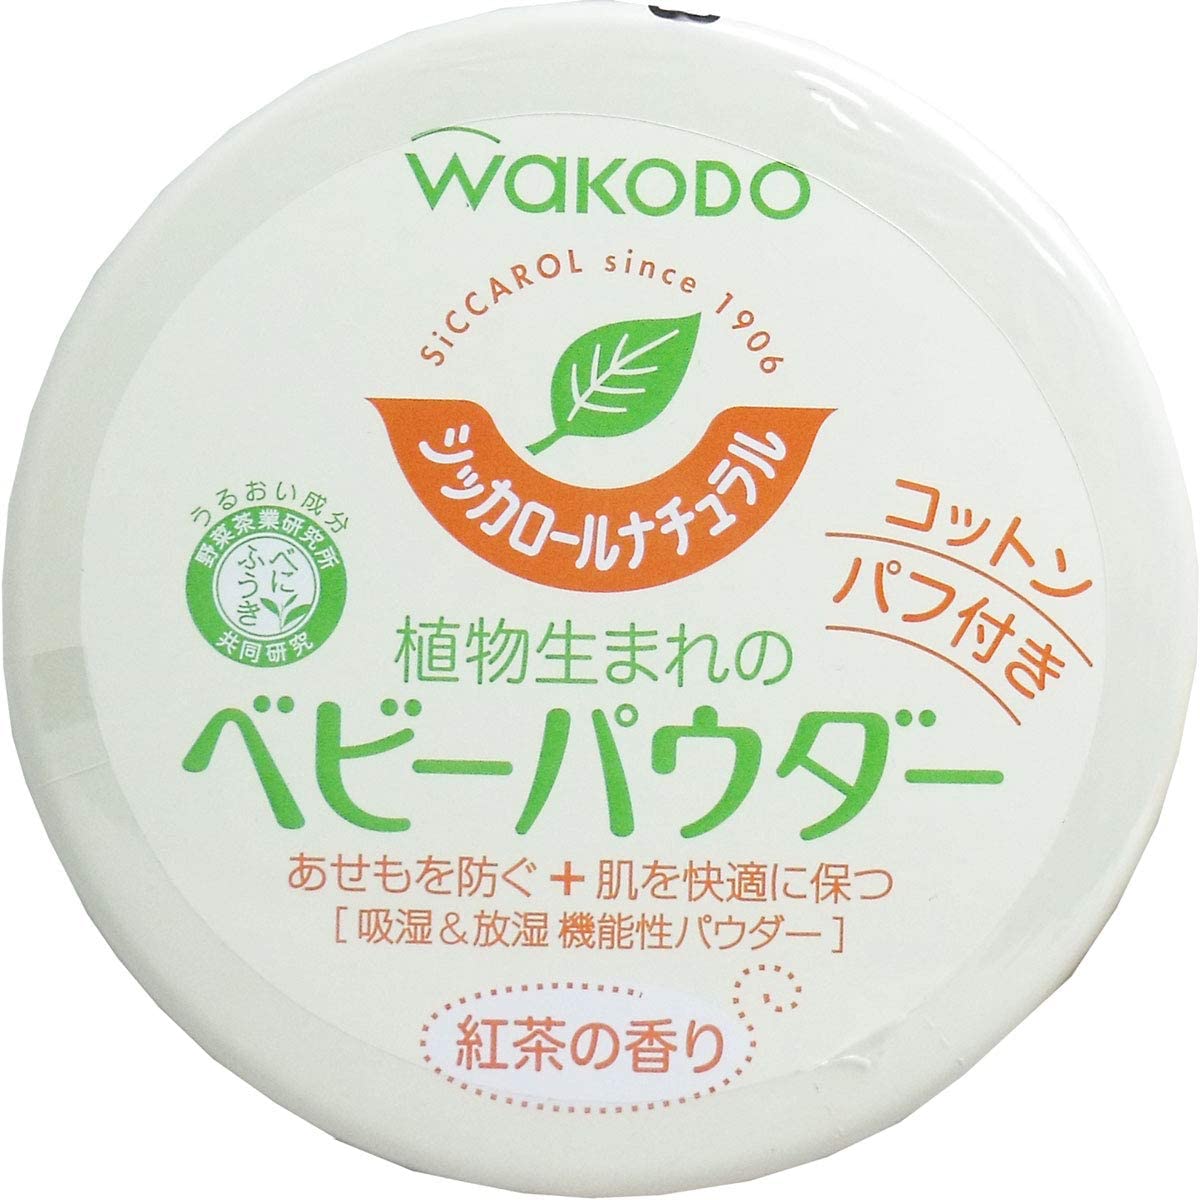 Shiseido Senka White Beauty Lotion II Fresh Type 200ml - Japanese Whitening Lotion